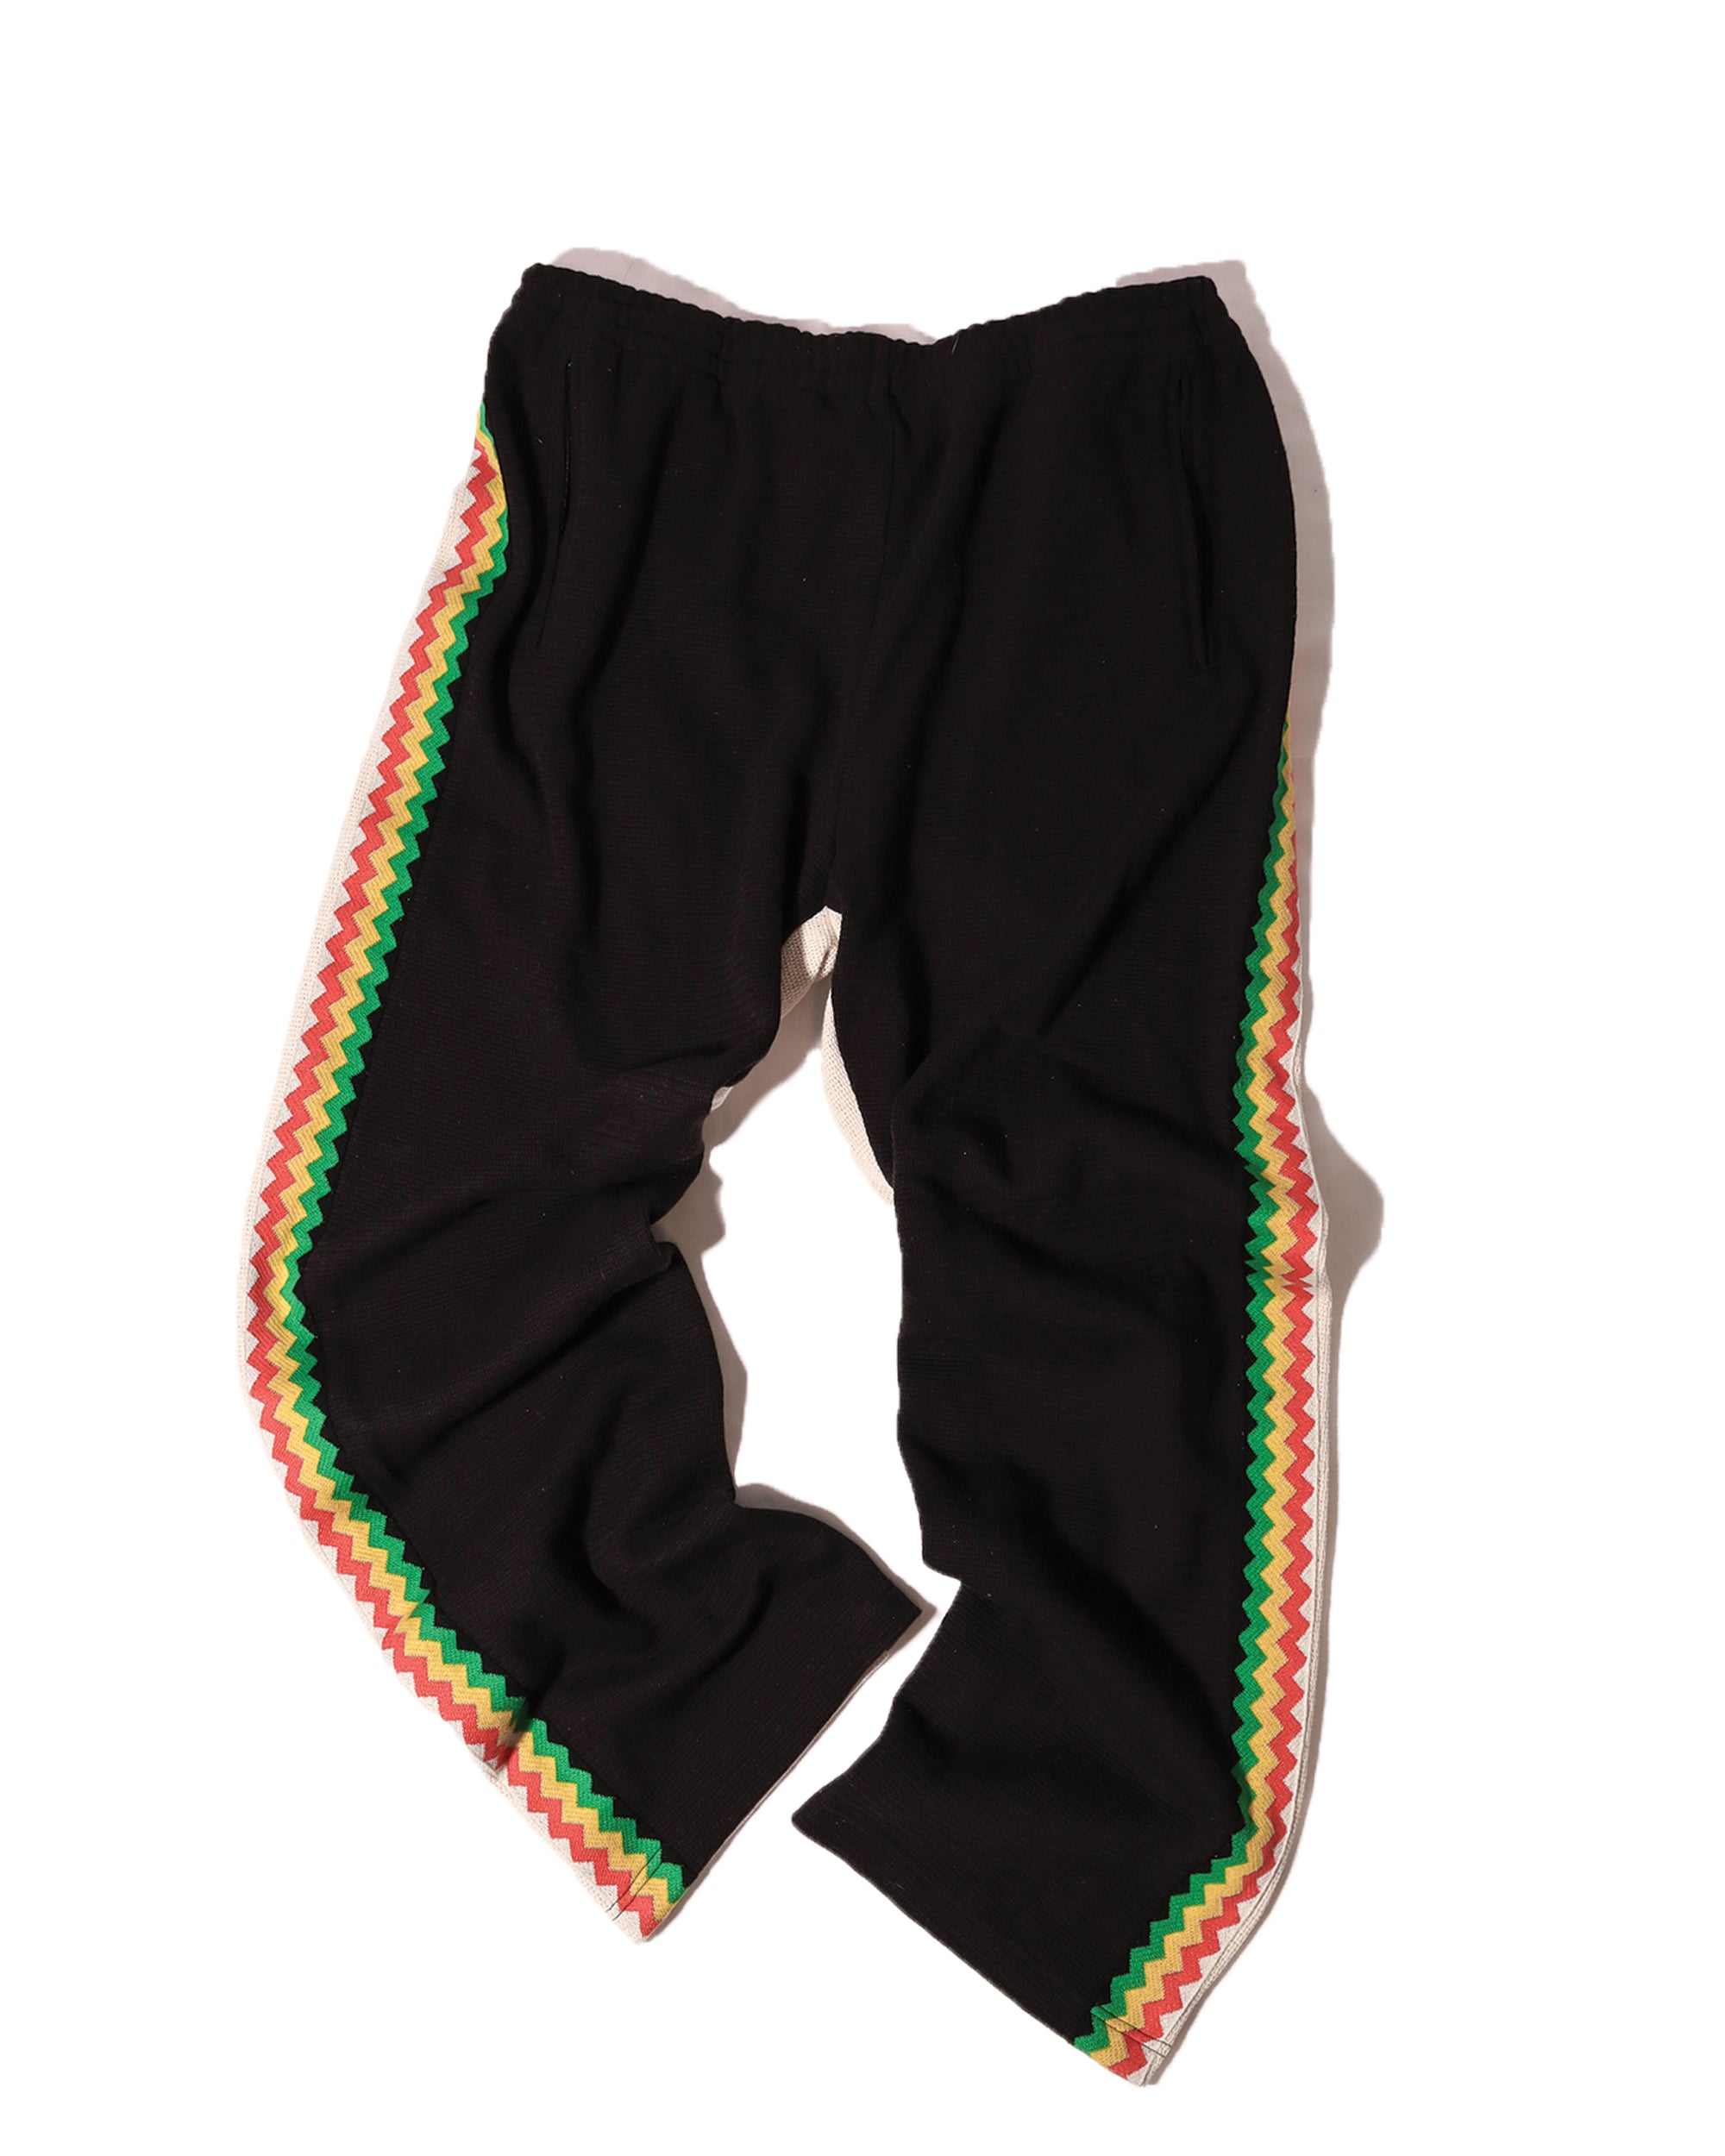 Crochet Tracksuit Pants - 50/50 - Black / Natural